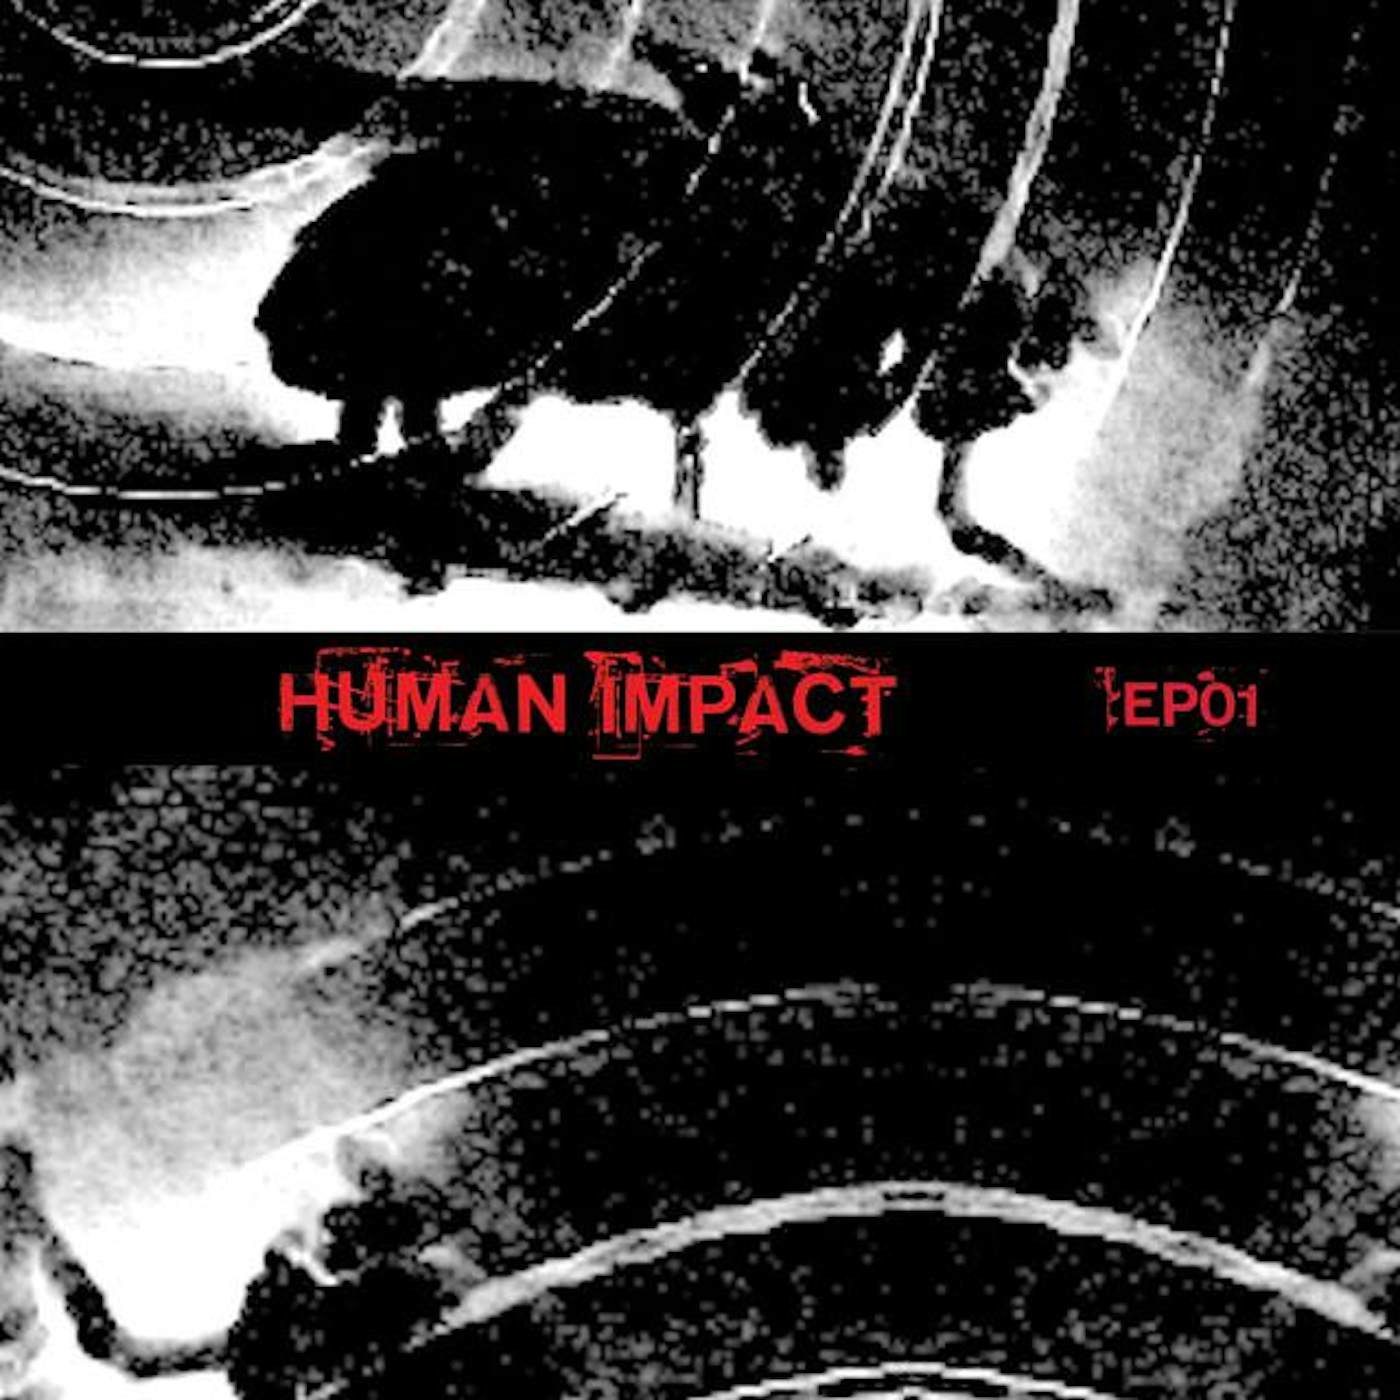 Human Impact